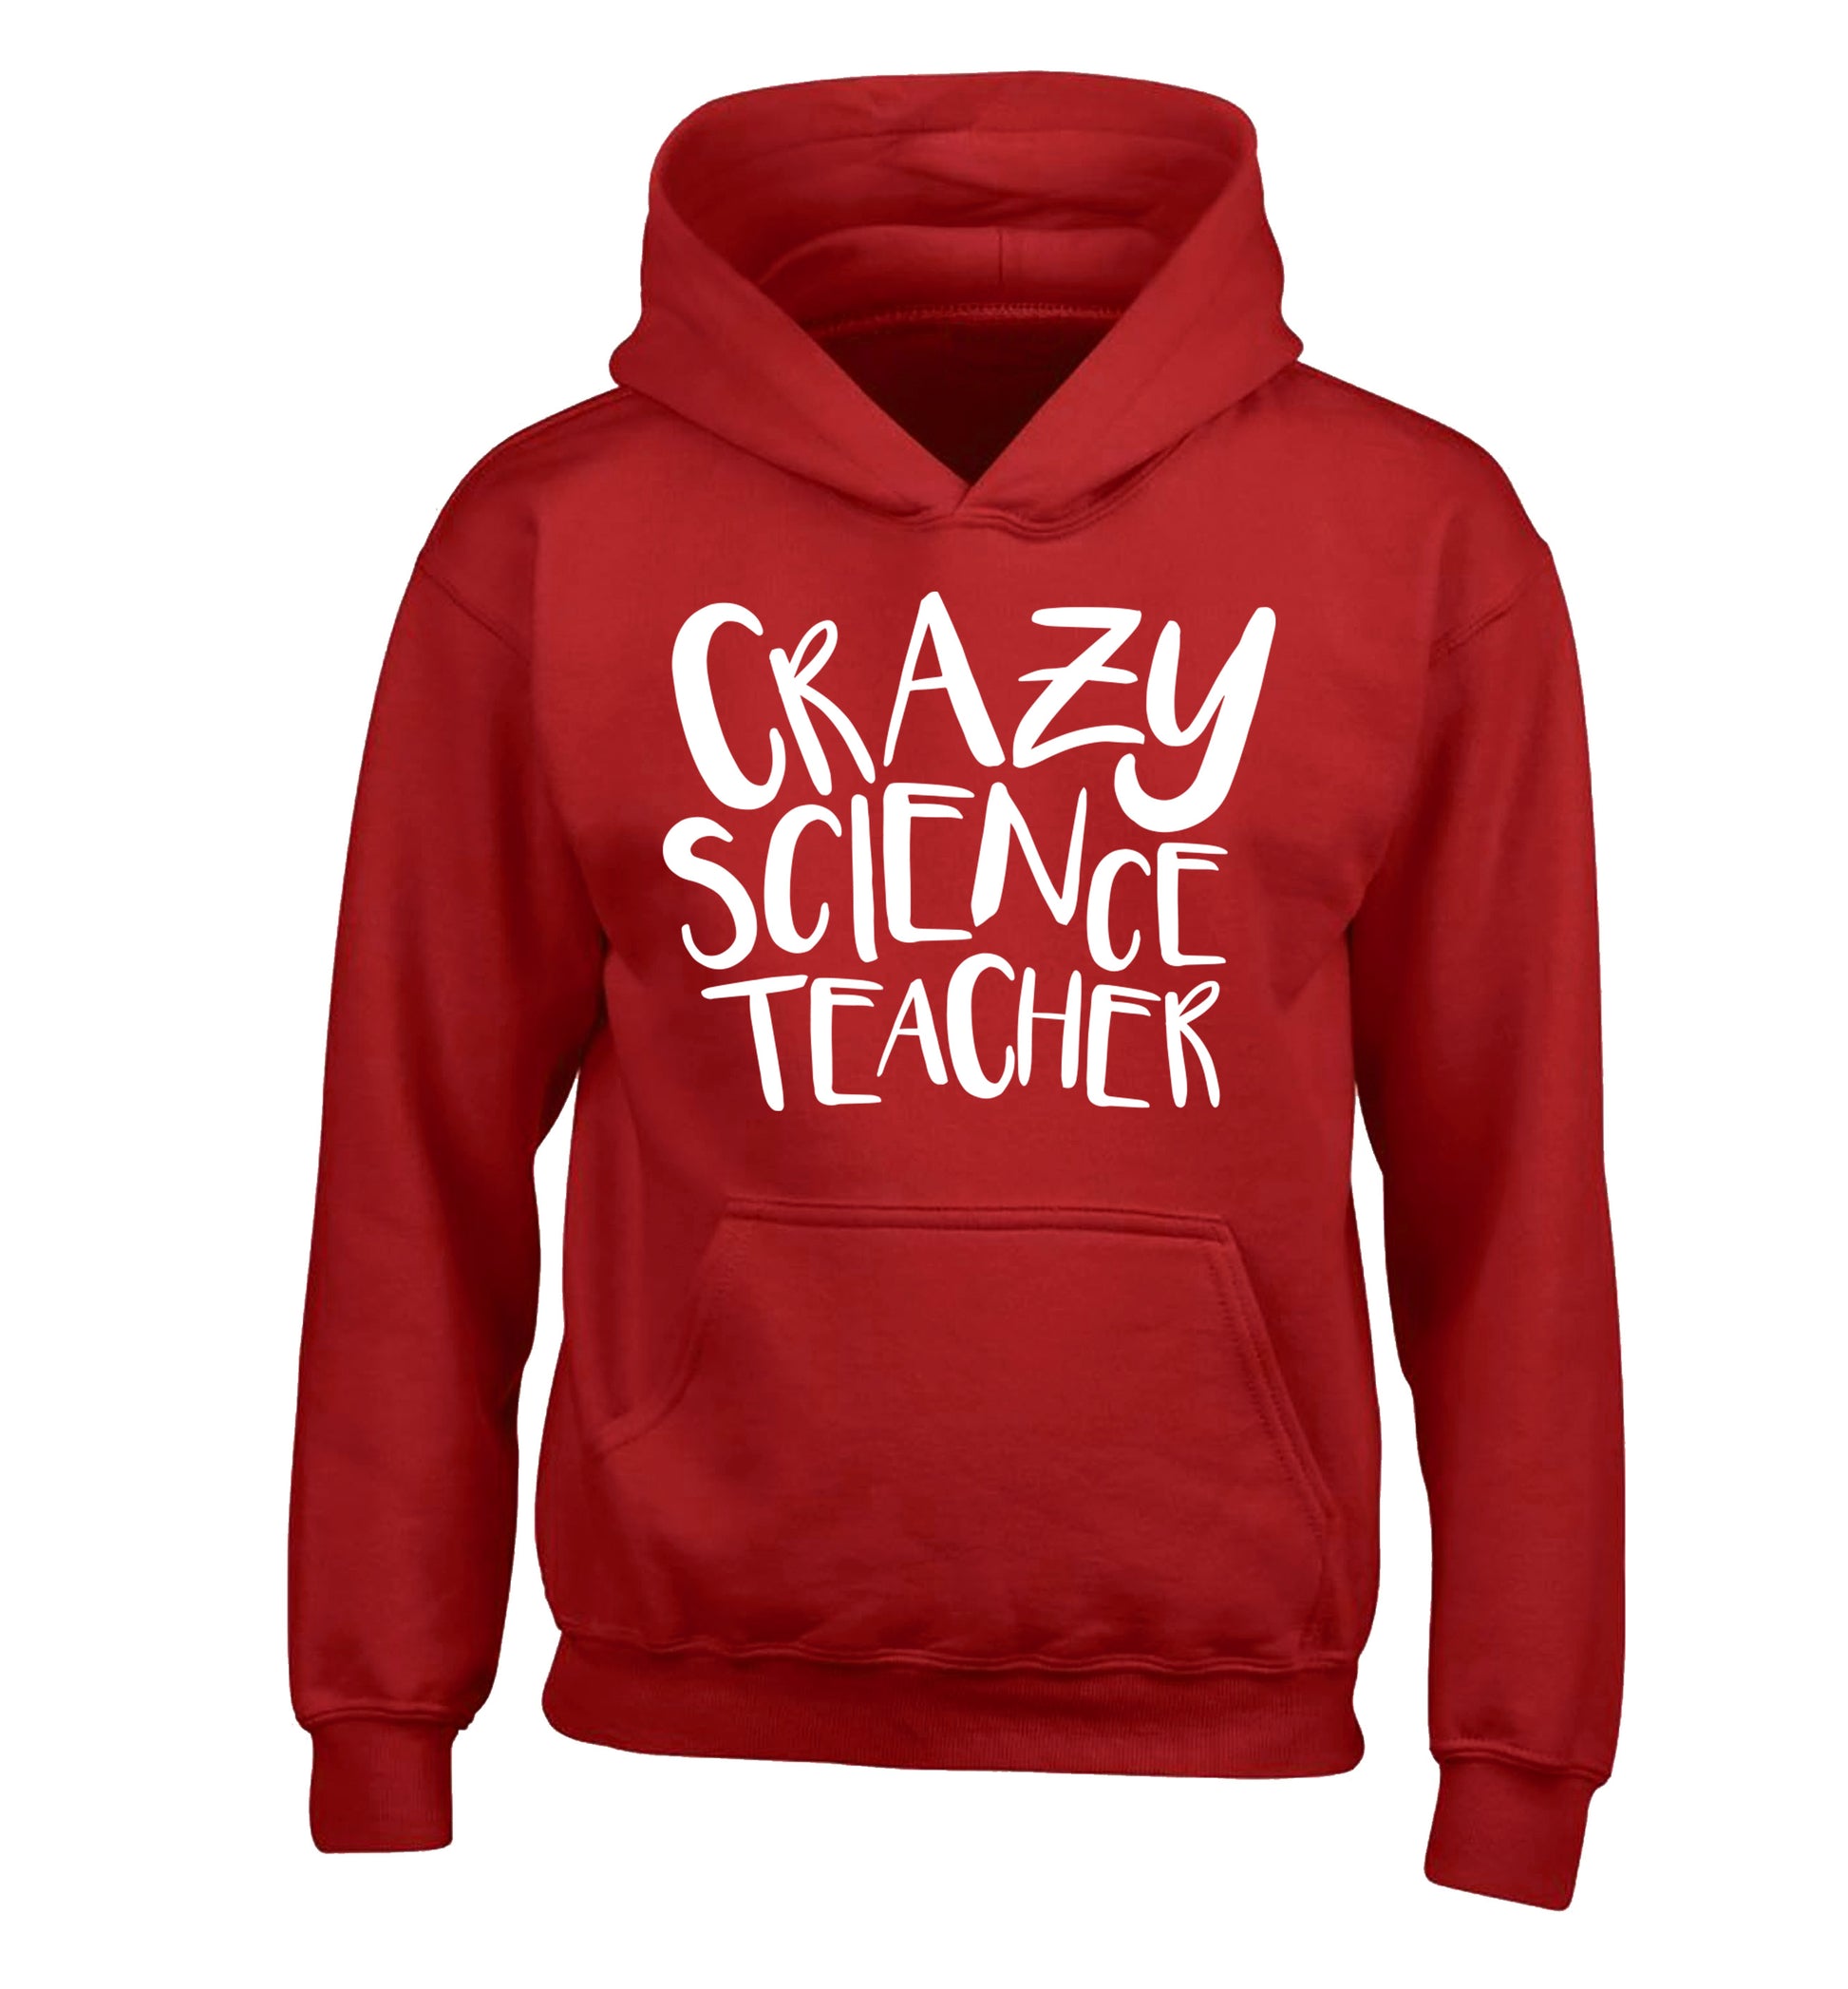 Crazy science teacher children's red hoodie 12-13 Years